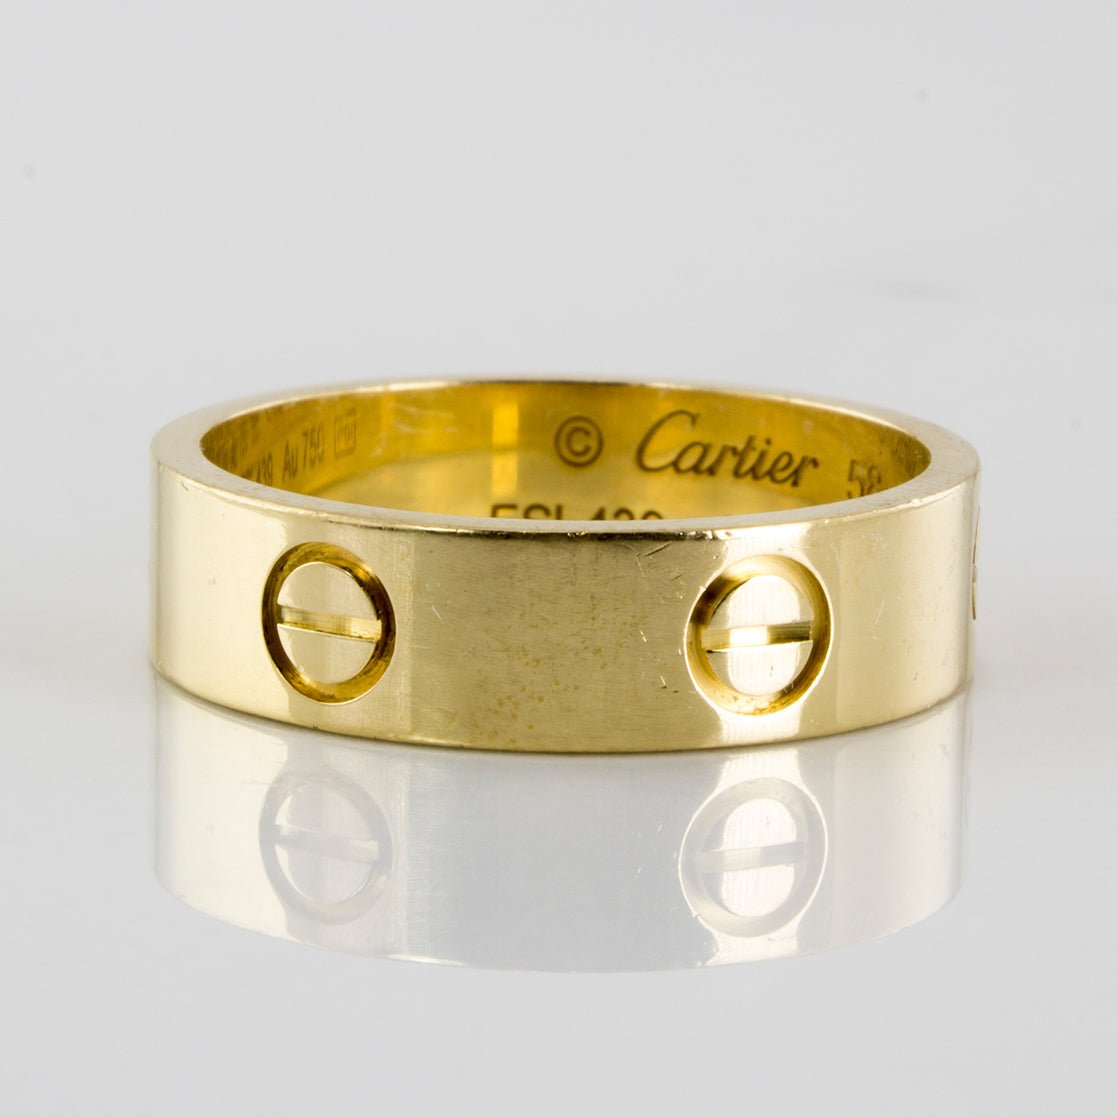 'Cartier' Love Band - 100 Ways